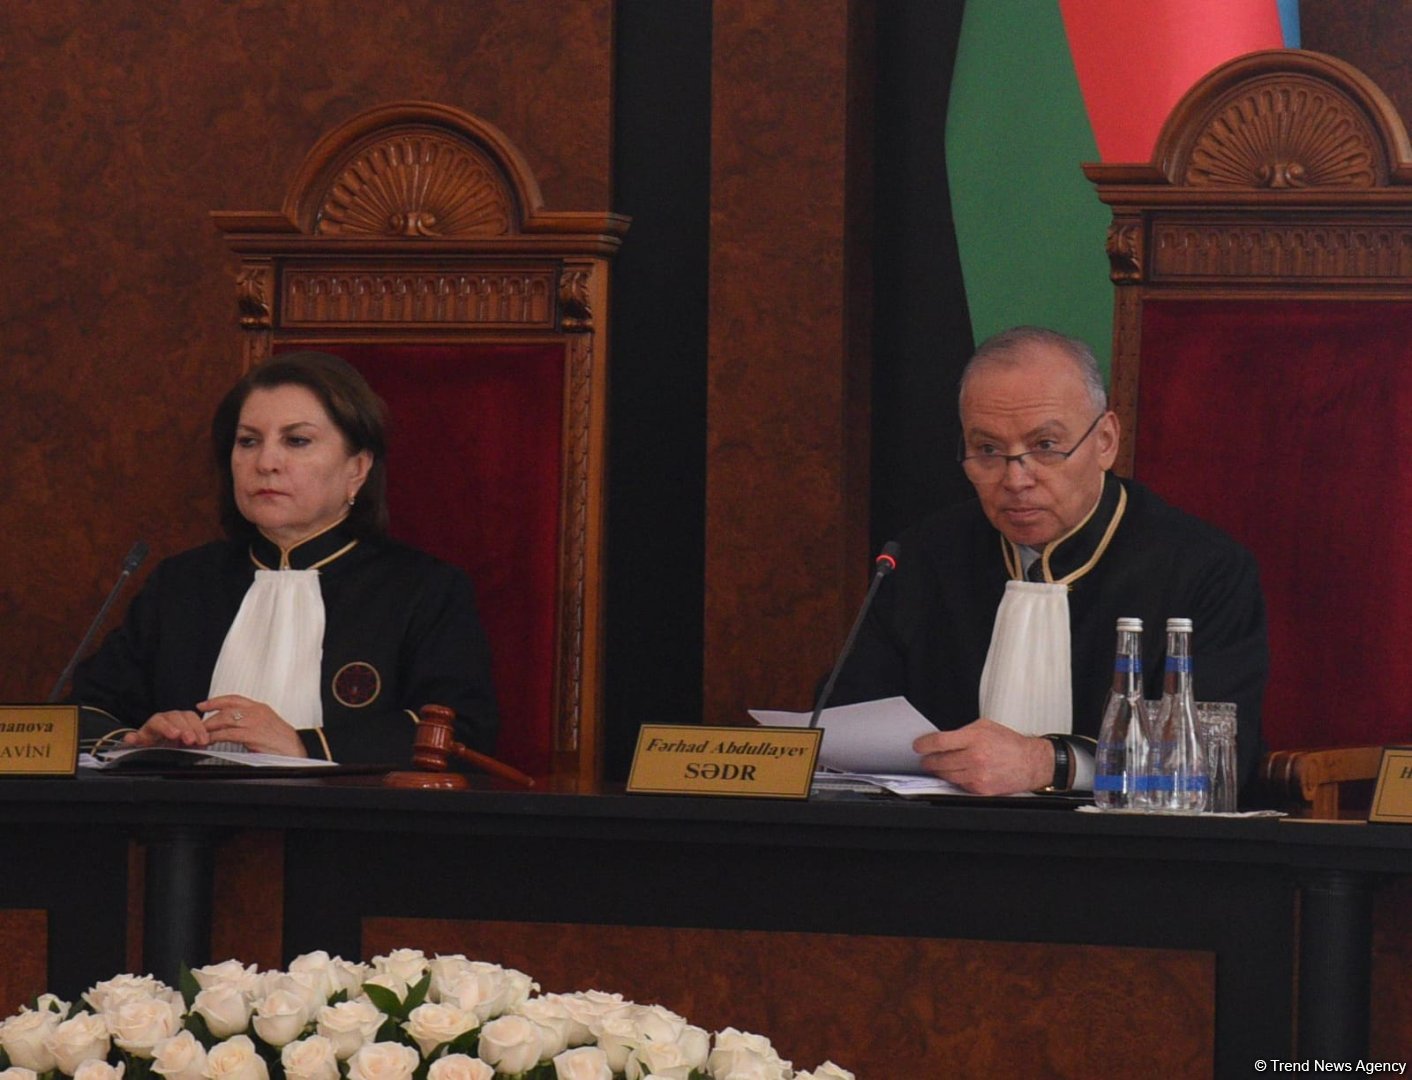 Состоялось заседание Пленума Конституционного суда Азербайджана в связи с президентскими выборами  (ФОТО) (Обновлено)